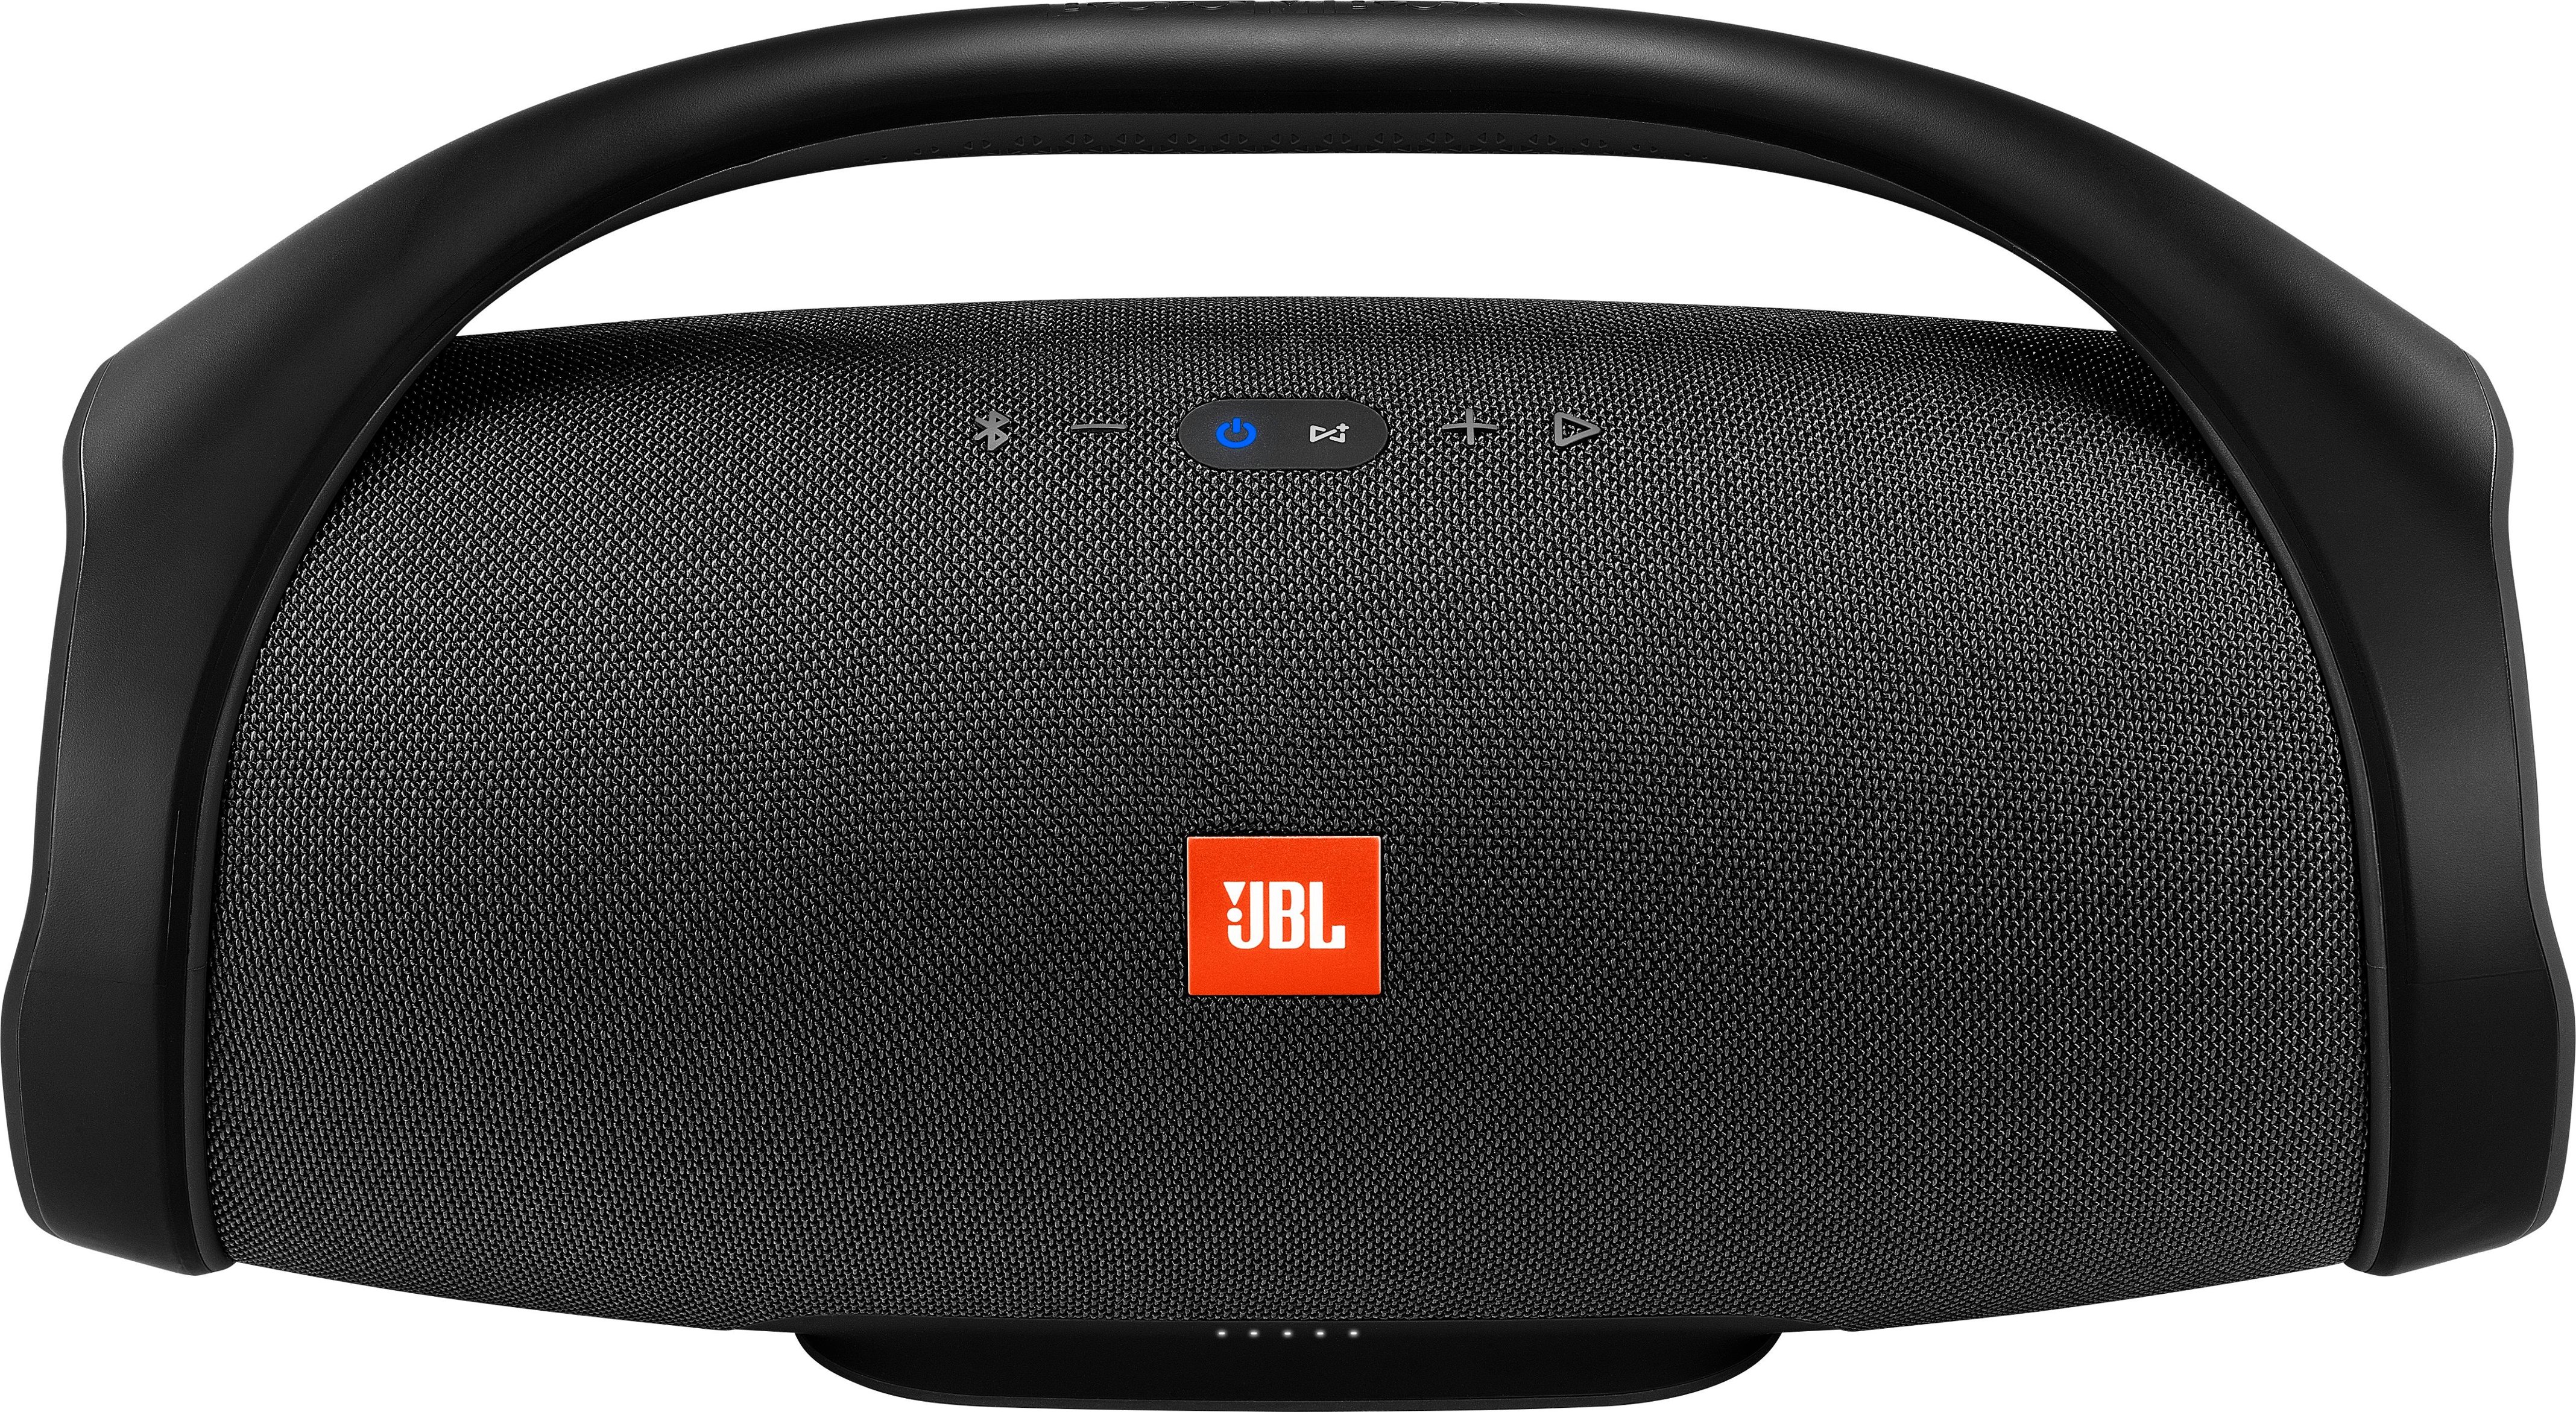 Afleiden palm opslag JBL Boombox Portable Bluetooth Speaker Black JBLBOOMBOXBLKAM - Best Buy